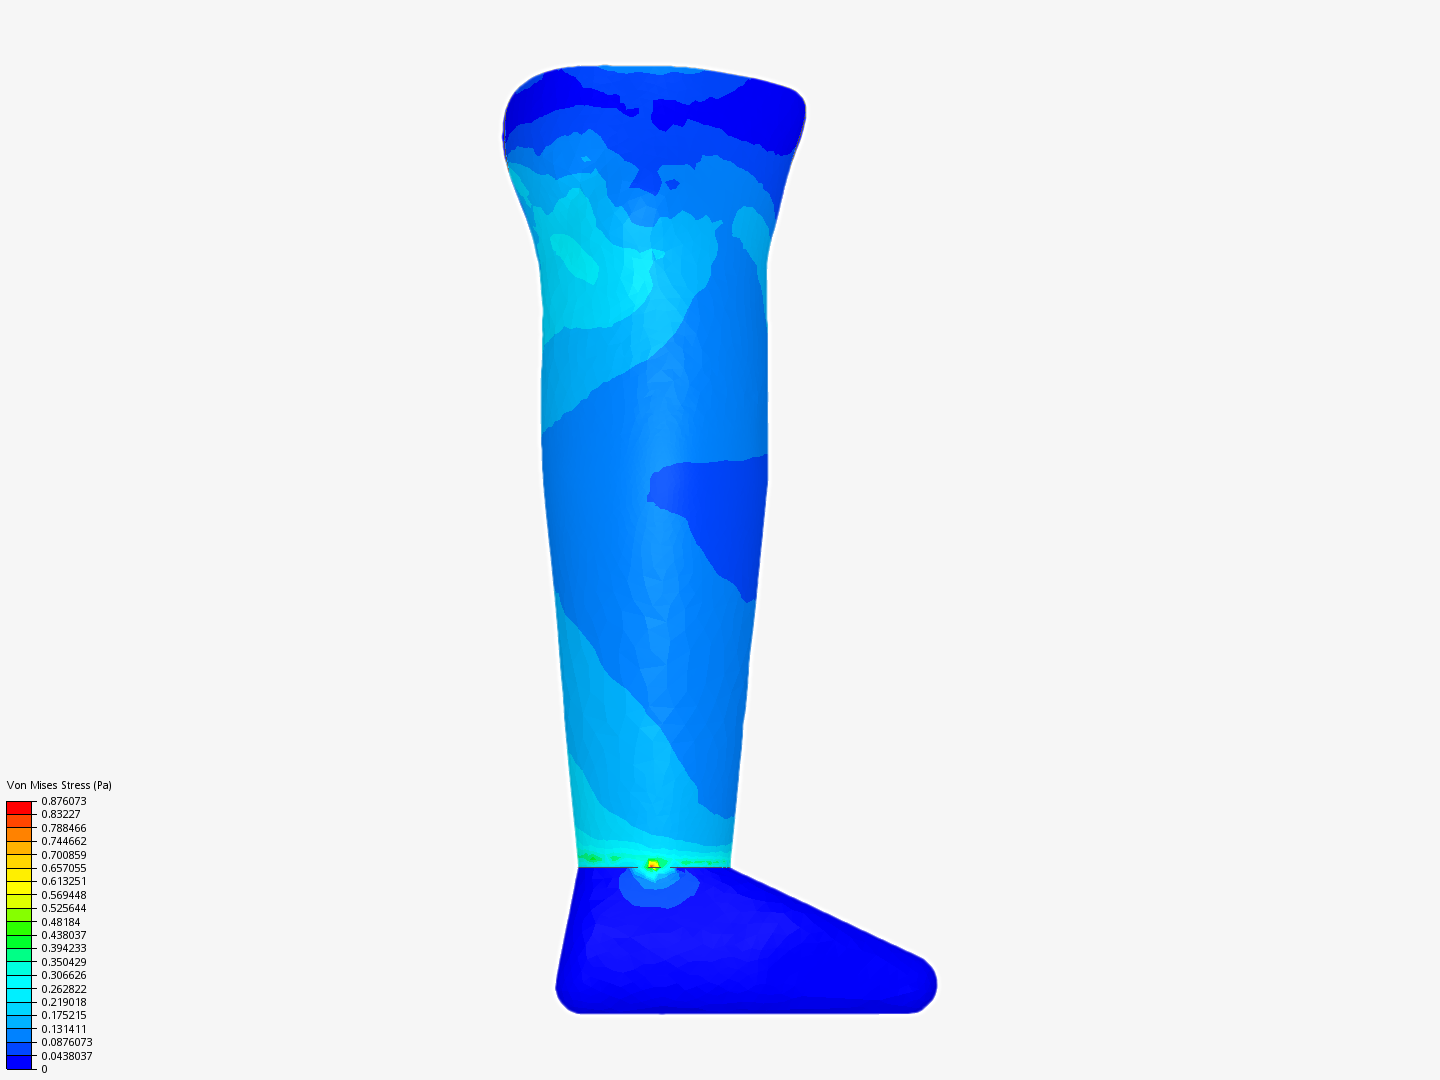 Prosthetic leg image